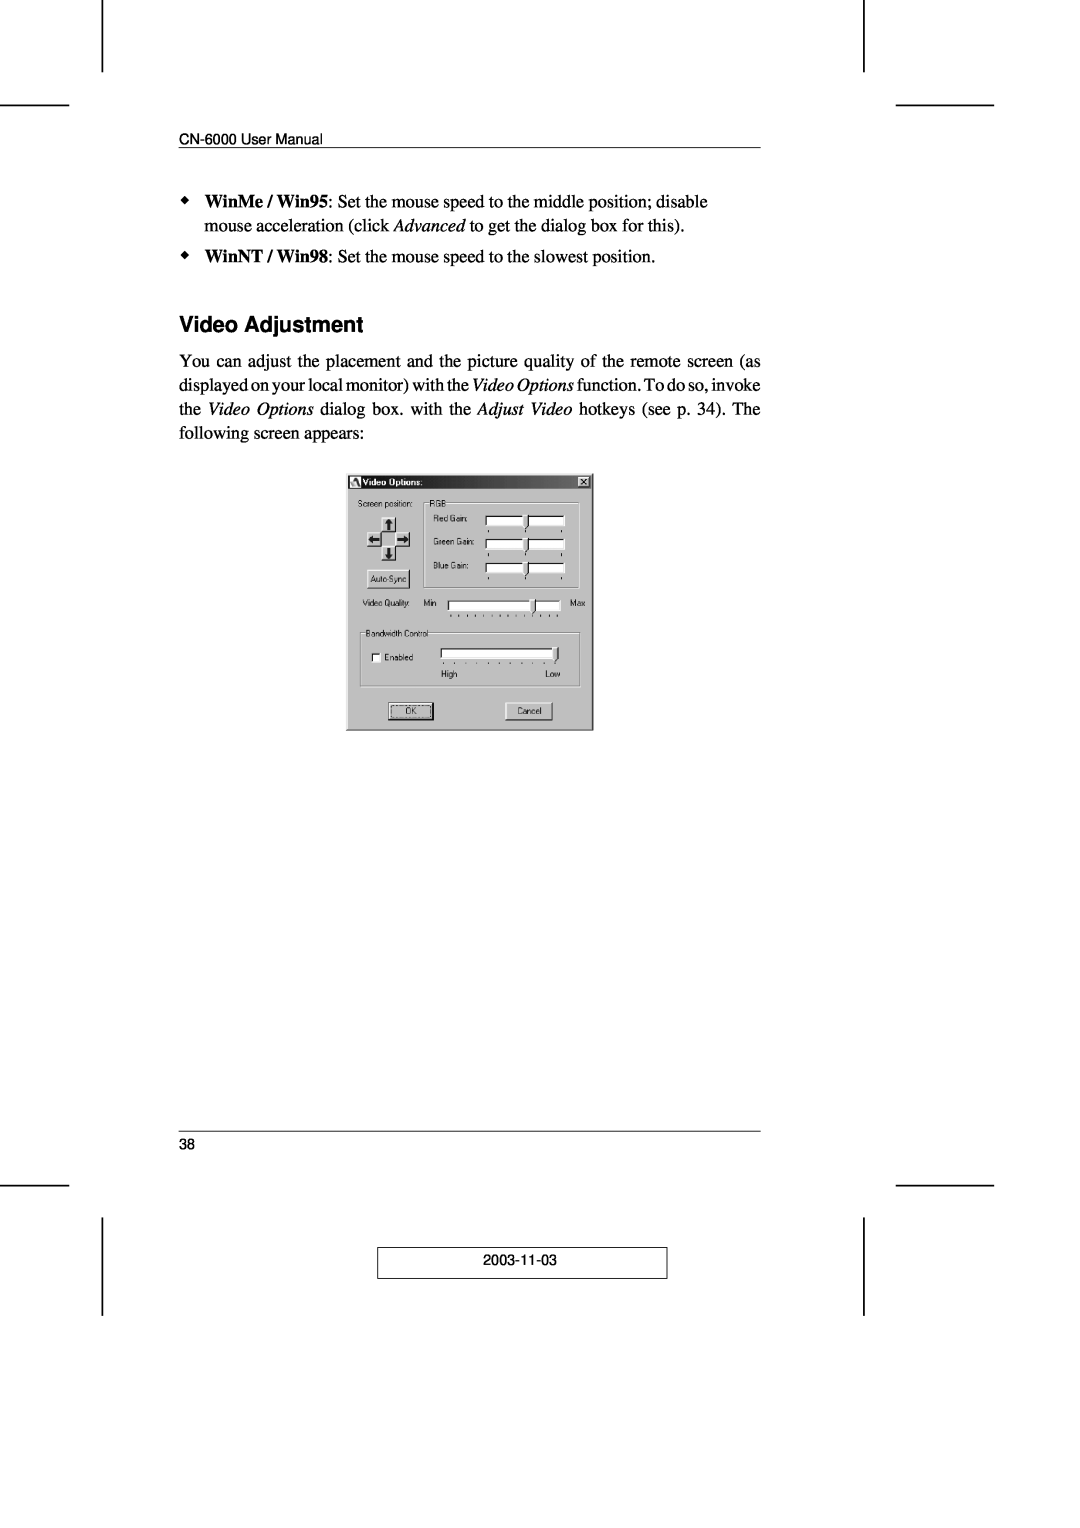 ATEN Technology CN-6000 user manual Video Adjustment, 2003-11-03 